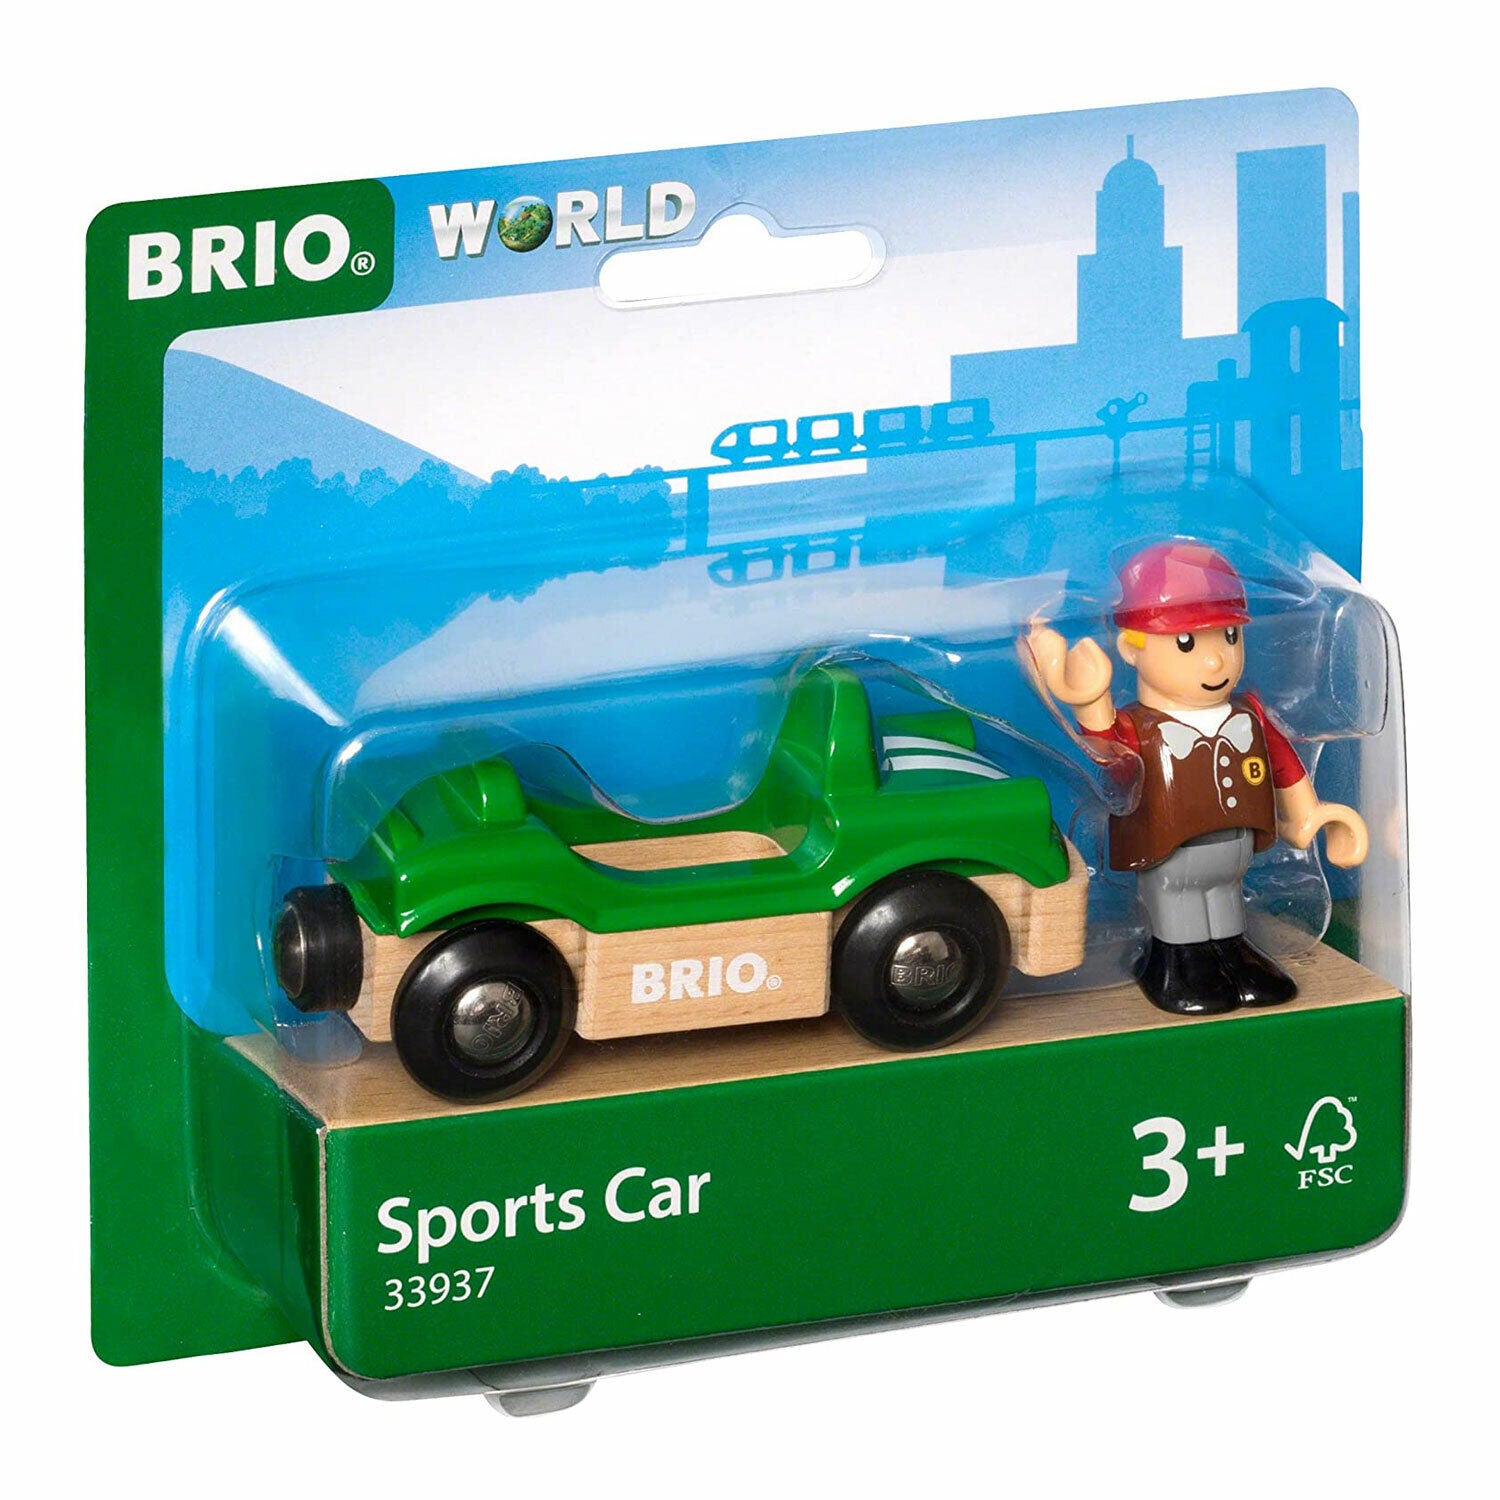 New BRIO World Sports Car 33937 - Fast & Fun Toy for Kids